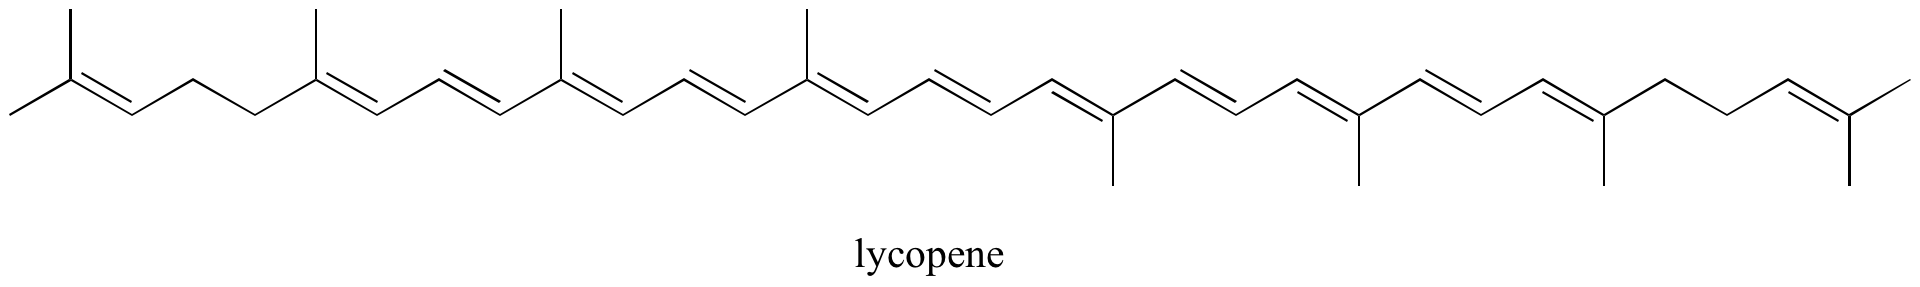 Dibujo de líneas de unión de licopeno